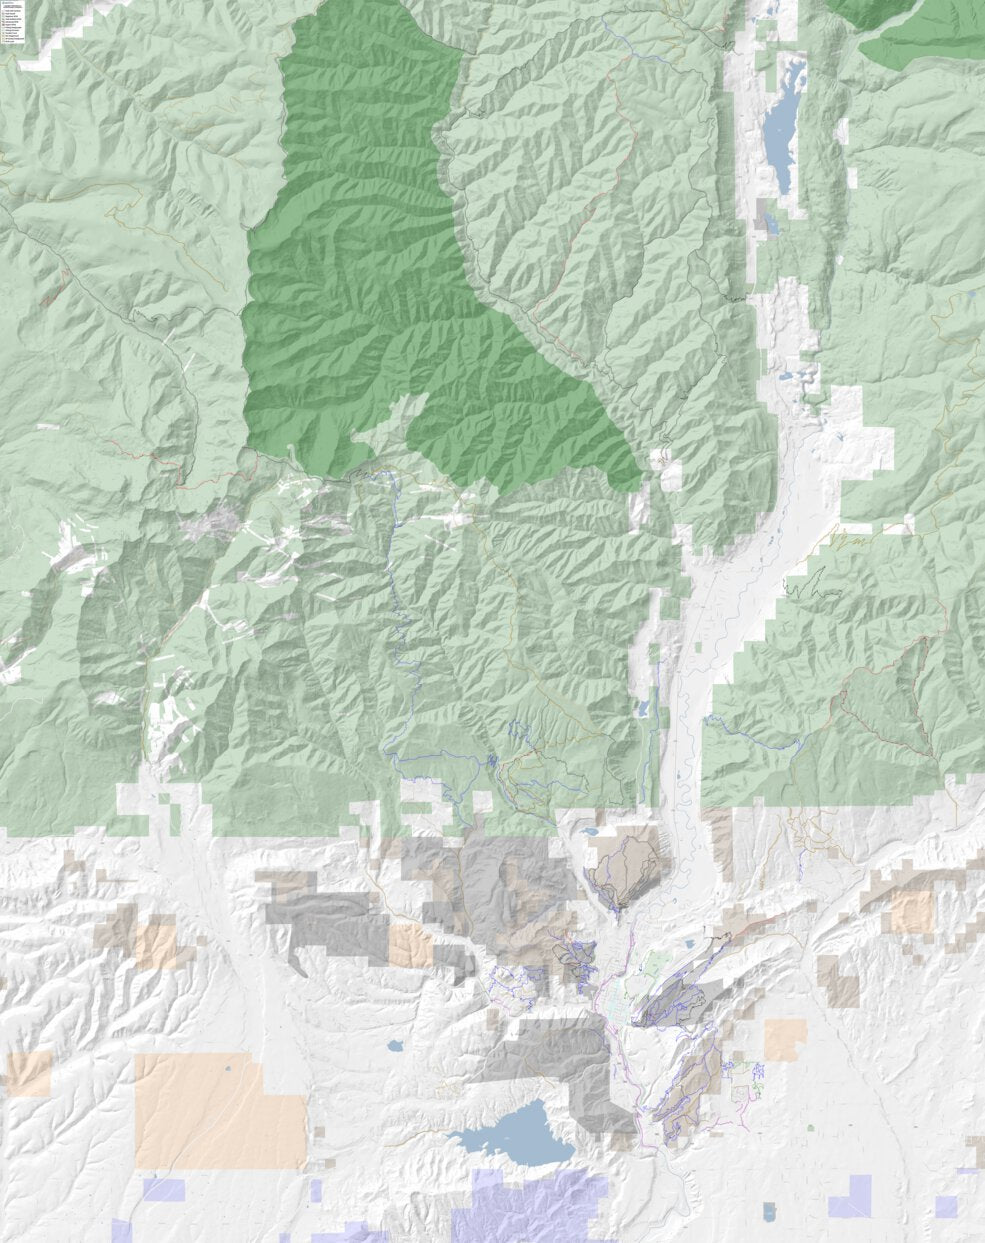 Durango Hike And Bike Trails Map By Orbital View Inc Avenza Maps